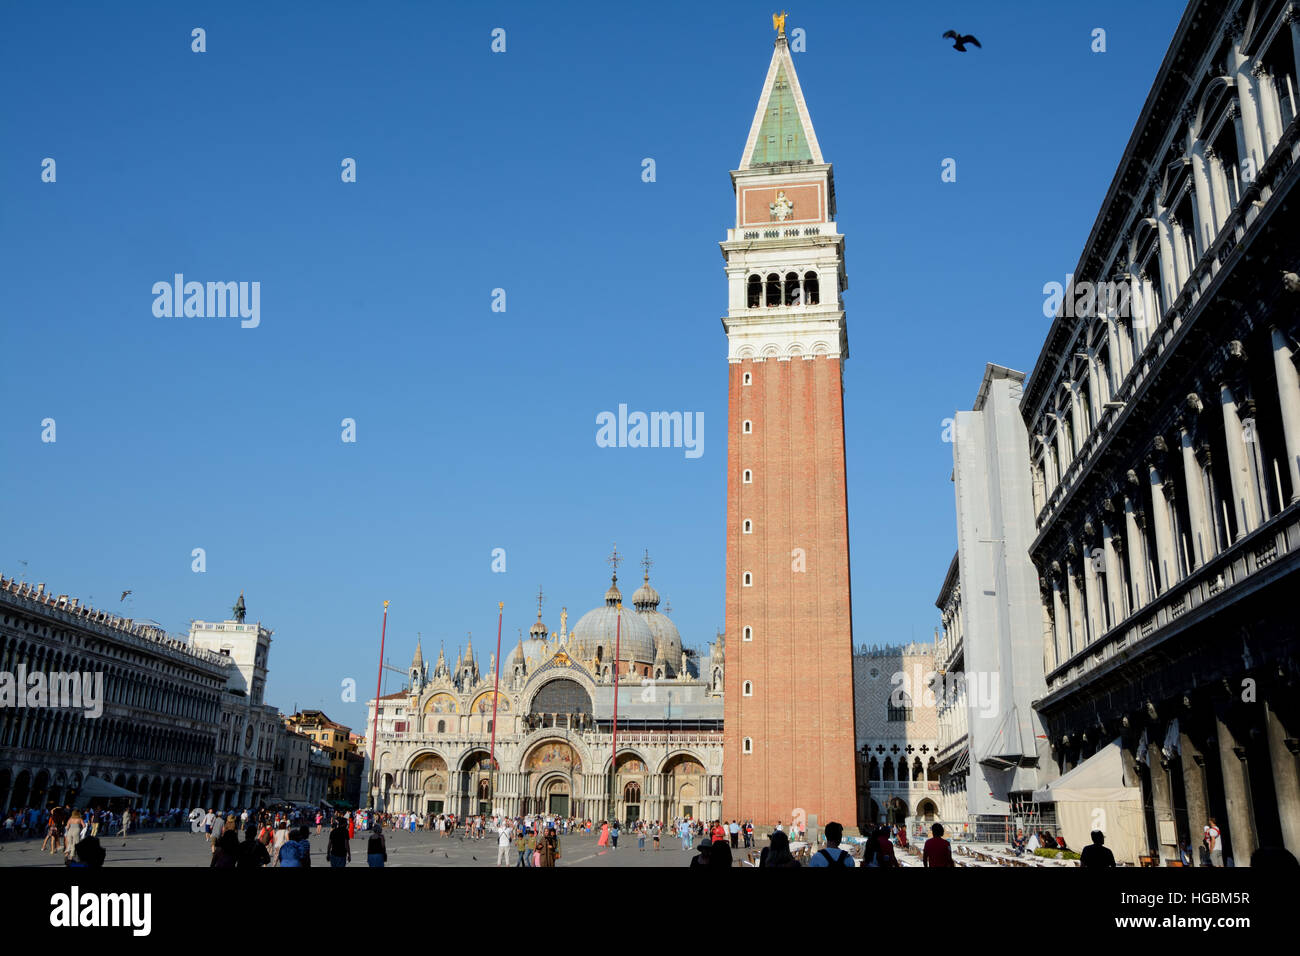 Venedig, Italien - 9. September 2016: Campanile di San Marco-Turm auf dem Platz Piazza San Marco in Venedig, Italien. Nicht identifizierte Personen sichtbar. Stockfoto